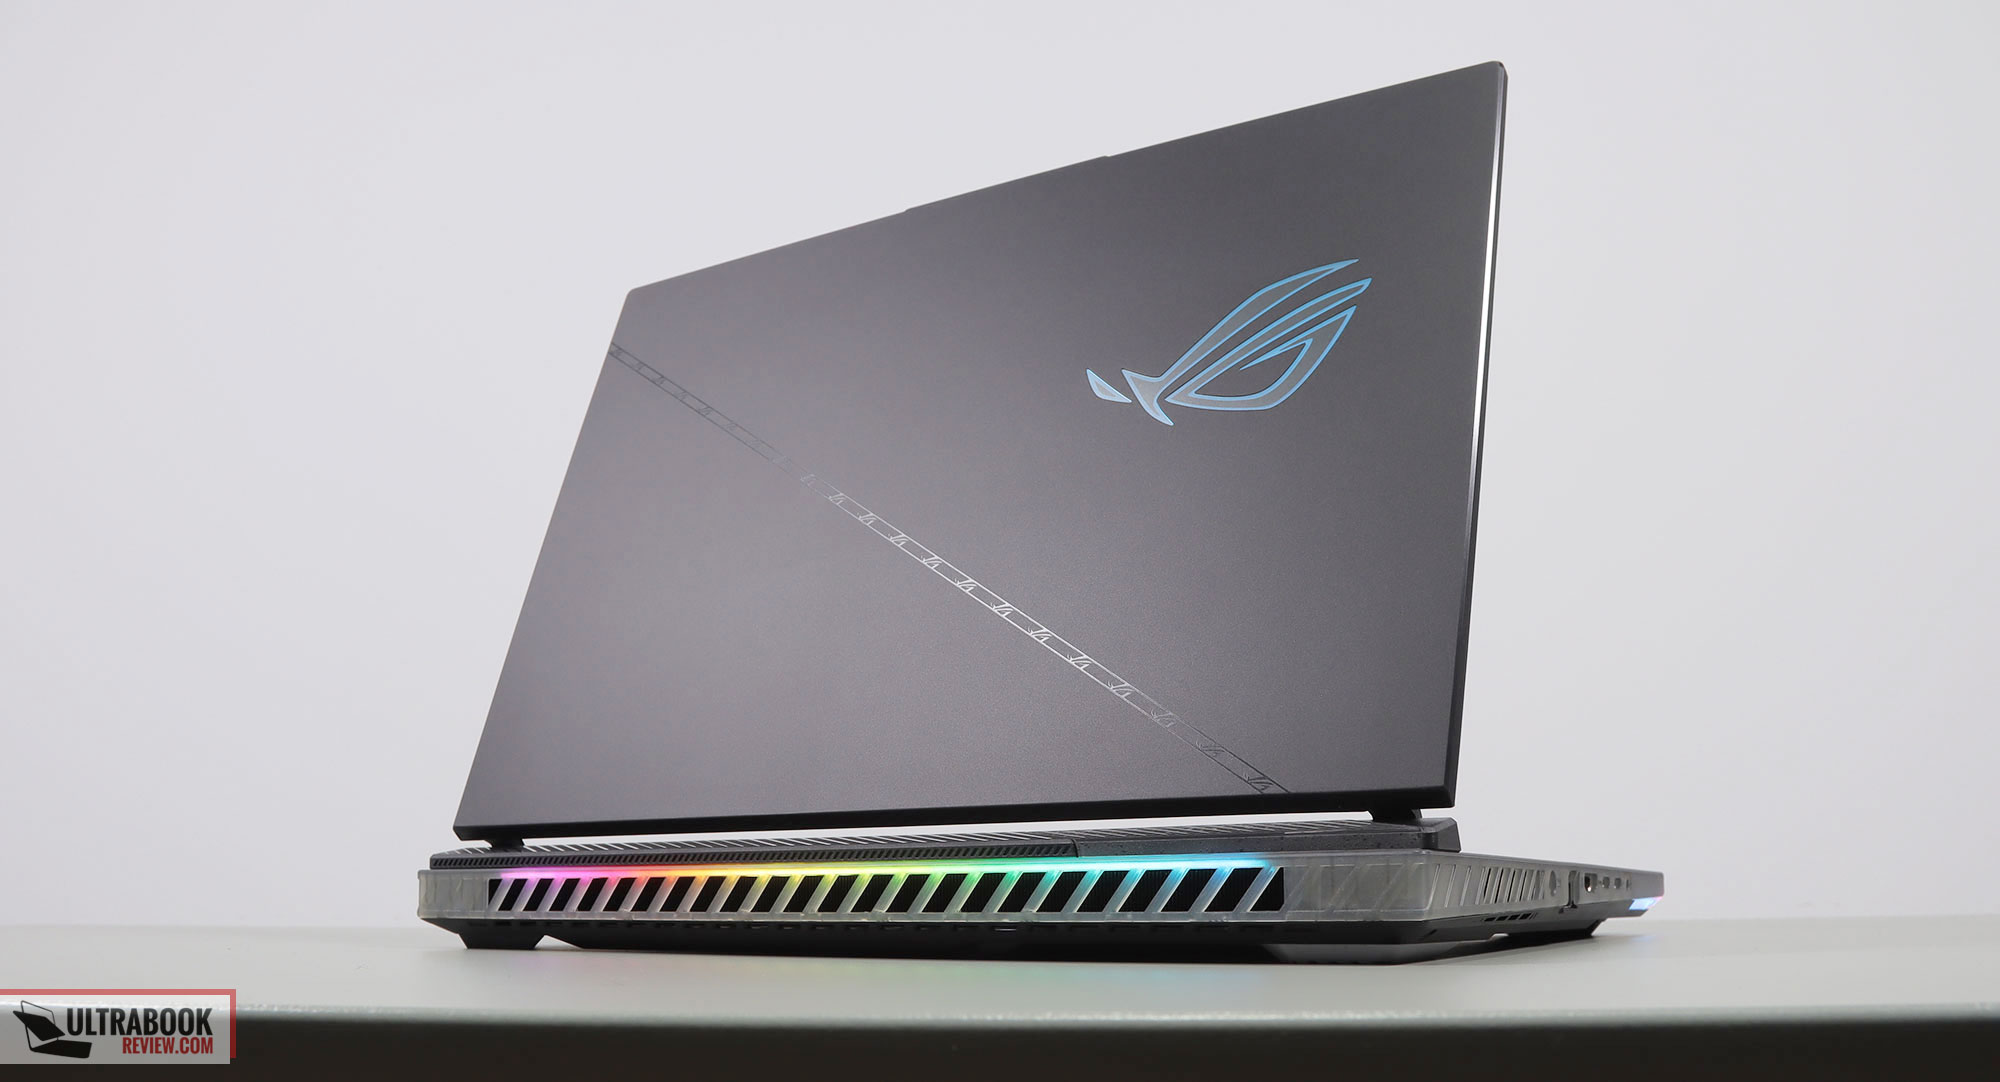 ASUS ROG Strix Scar 16 (2023) Gaming Laptop, 16” Nebula HDR QHD 240Hz  GeForce RTX 4080, Core i9-13980HX, 32GB DDR5, 1TB SSD, Win 11 Pro,  G634JZ-XS96 